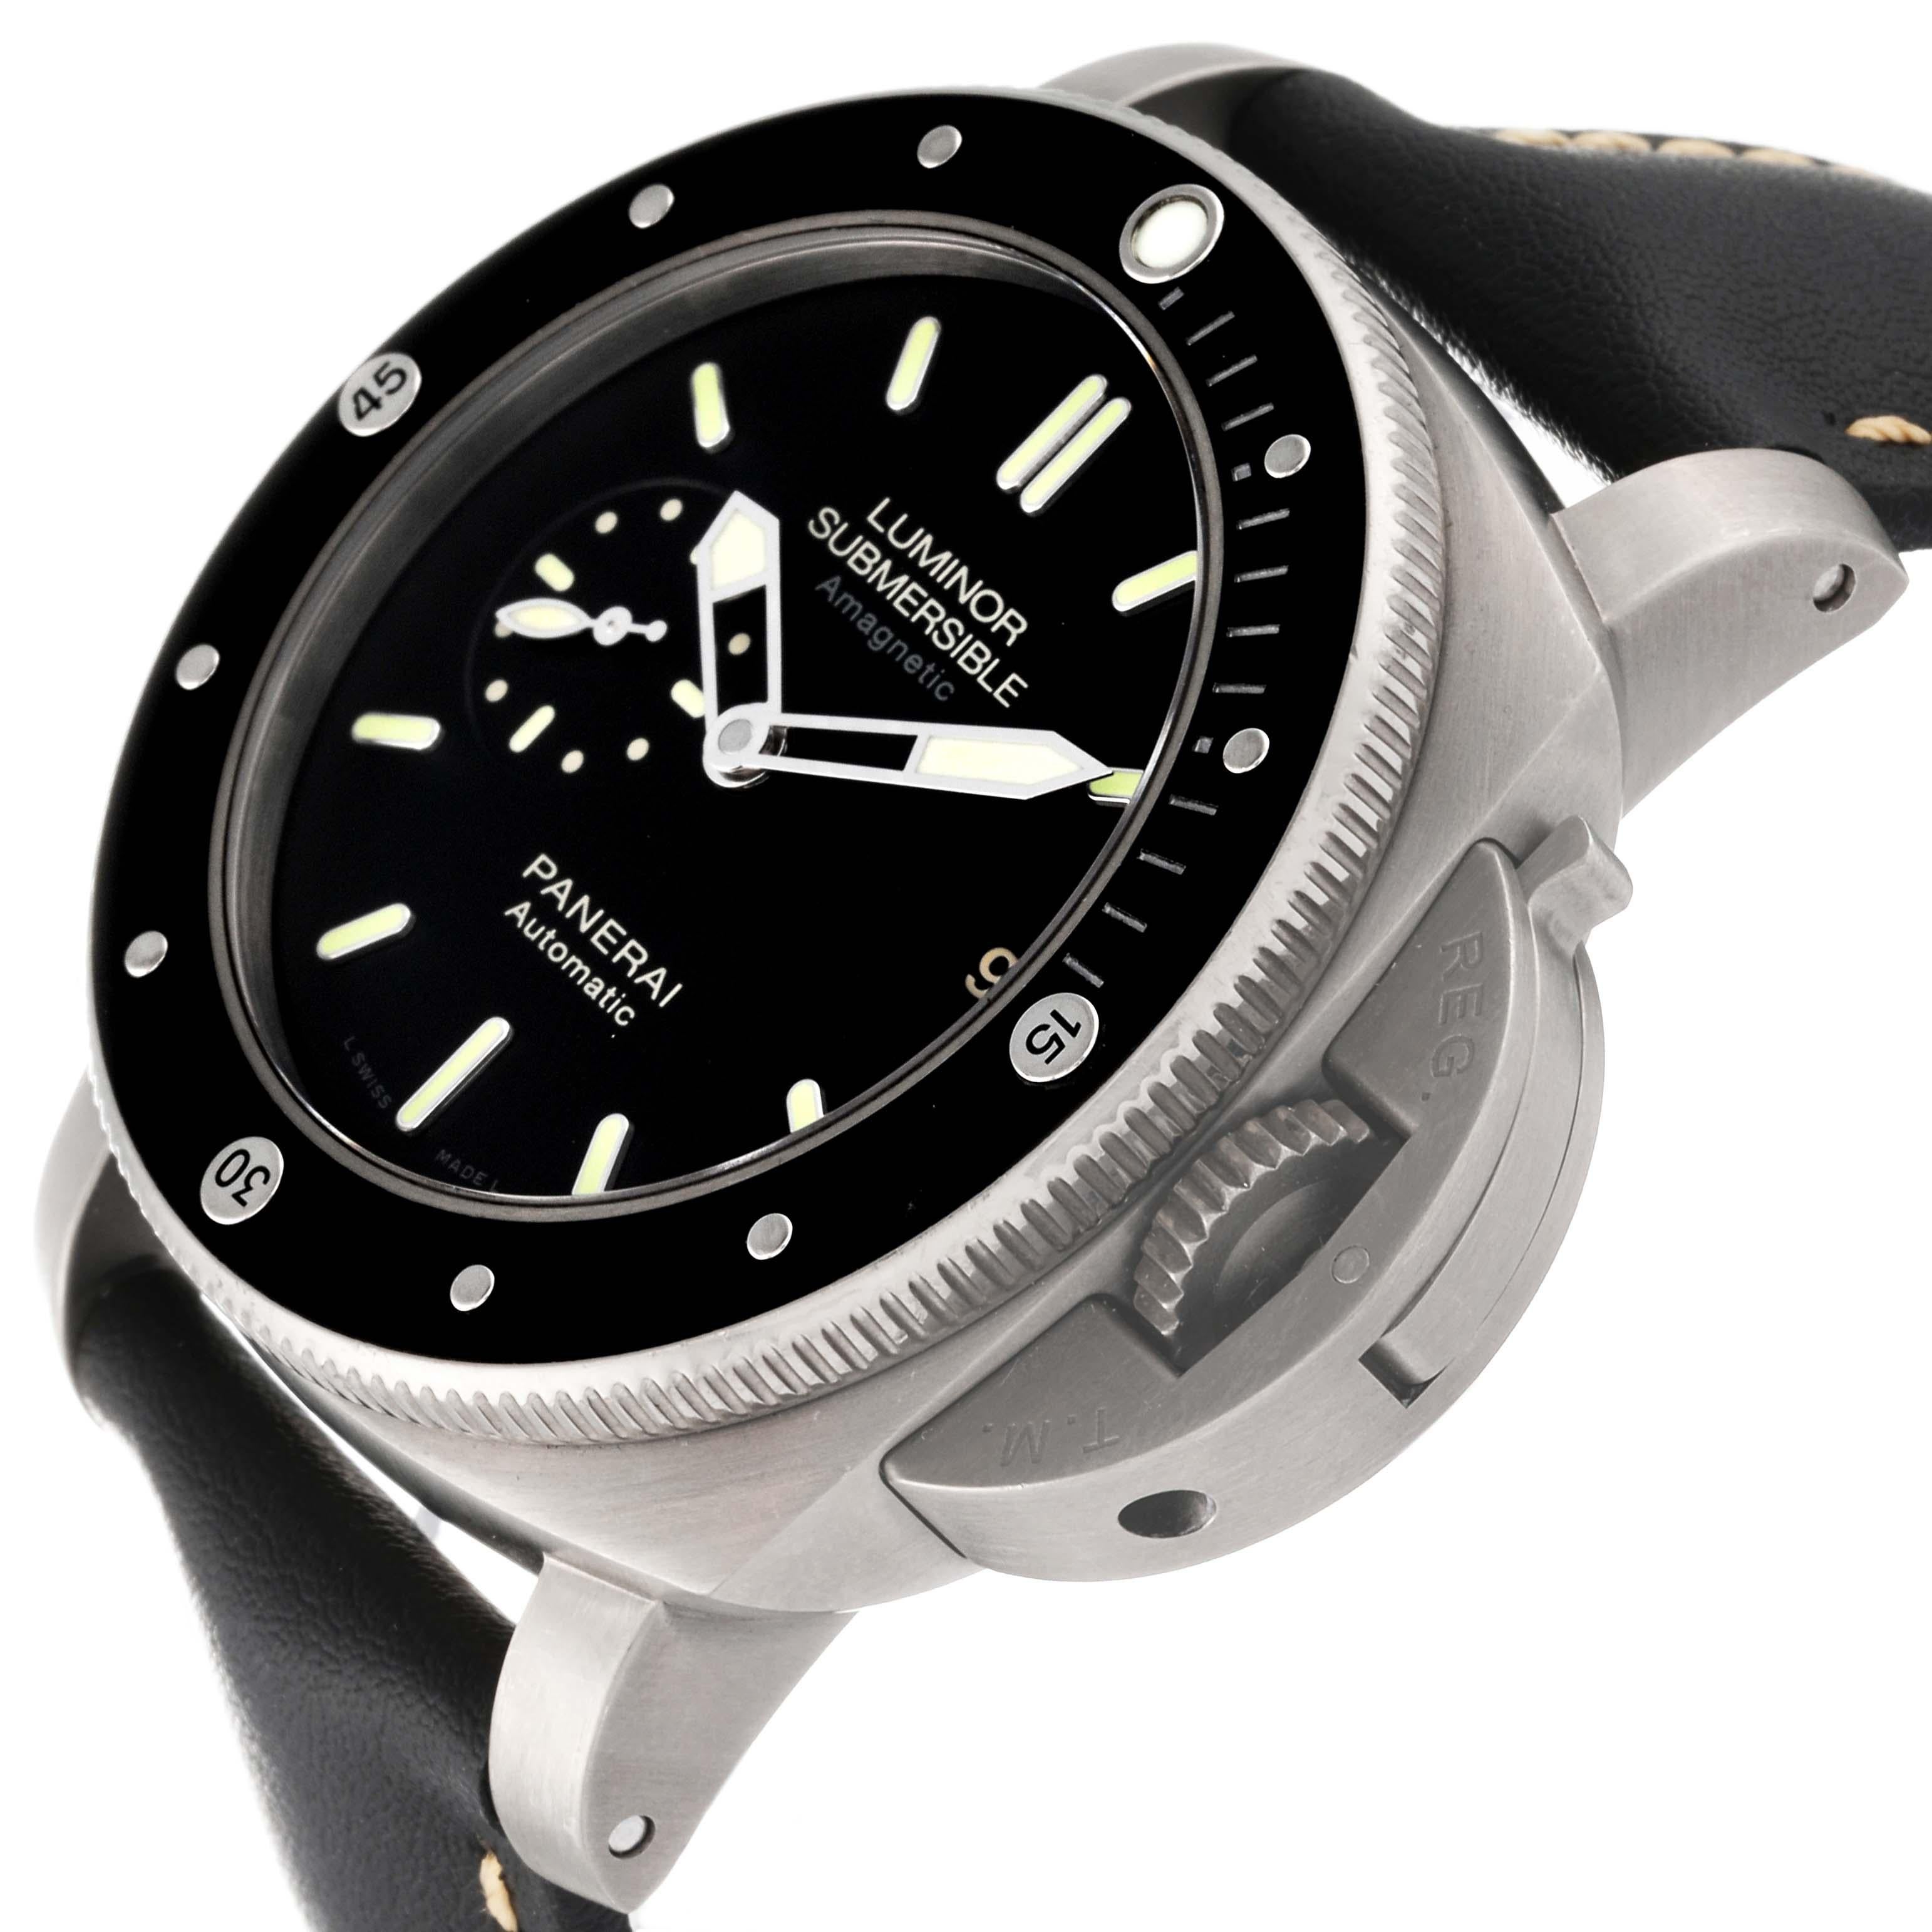 Men's Panerai Luminor Submersible 1950 Titanium Amagnetic Watch PAM00389 Box Papers For Sale